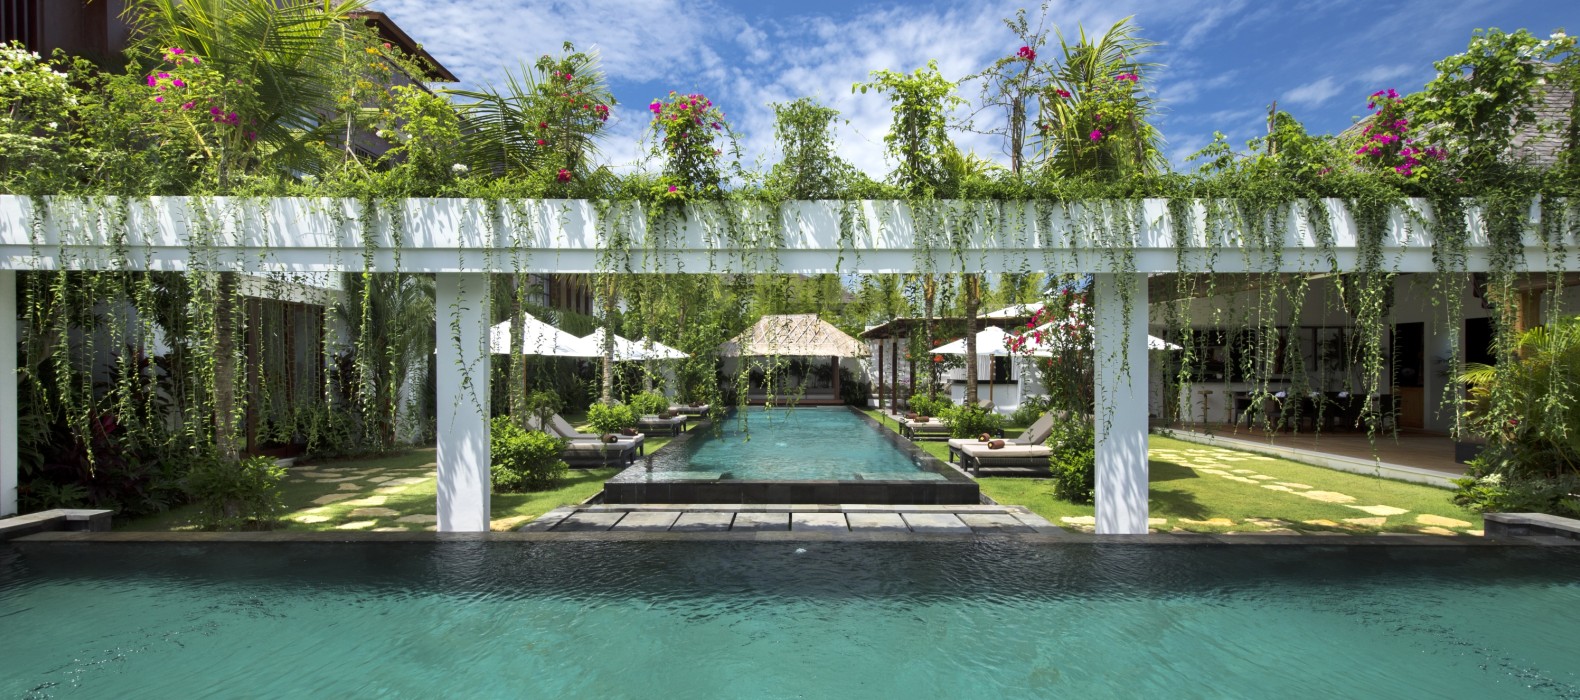 Exterior pool of Villa Anam in Bali